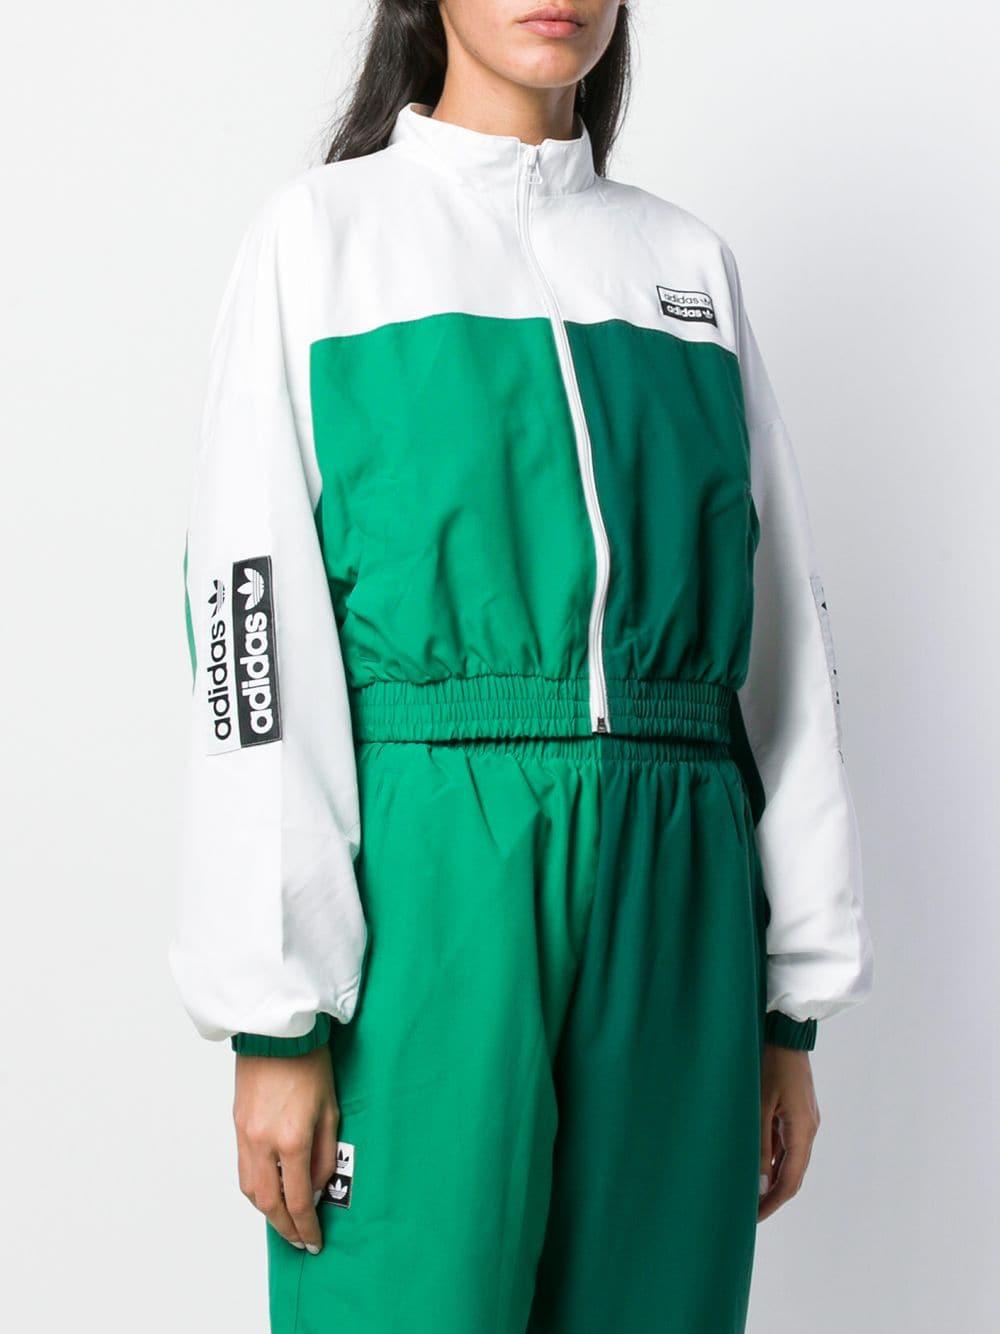 adidas green white jacket